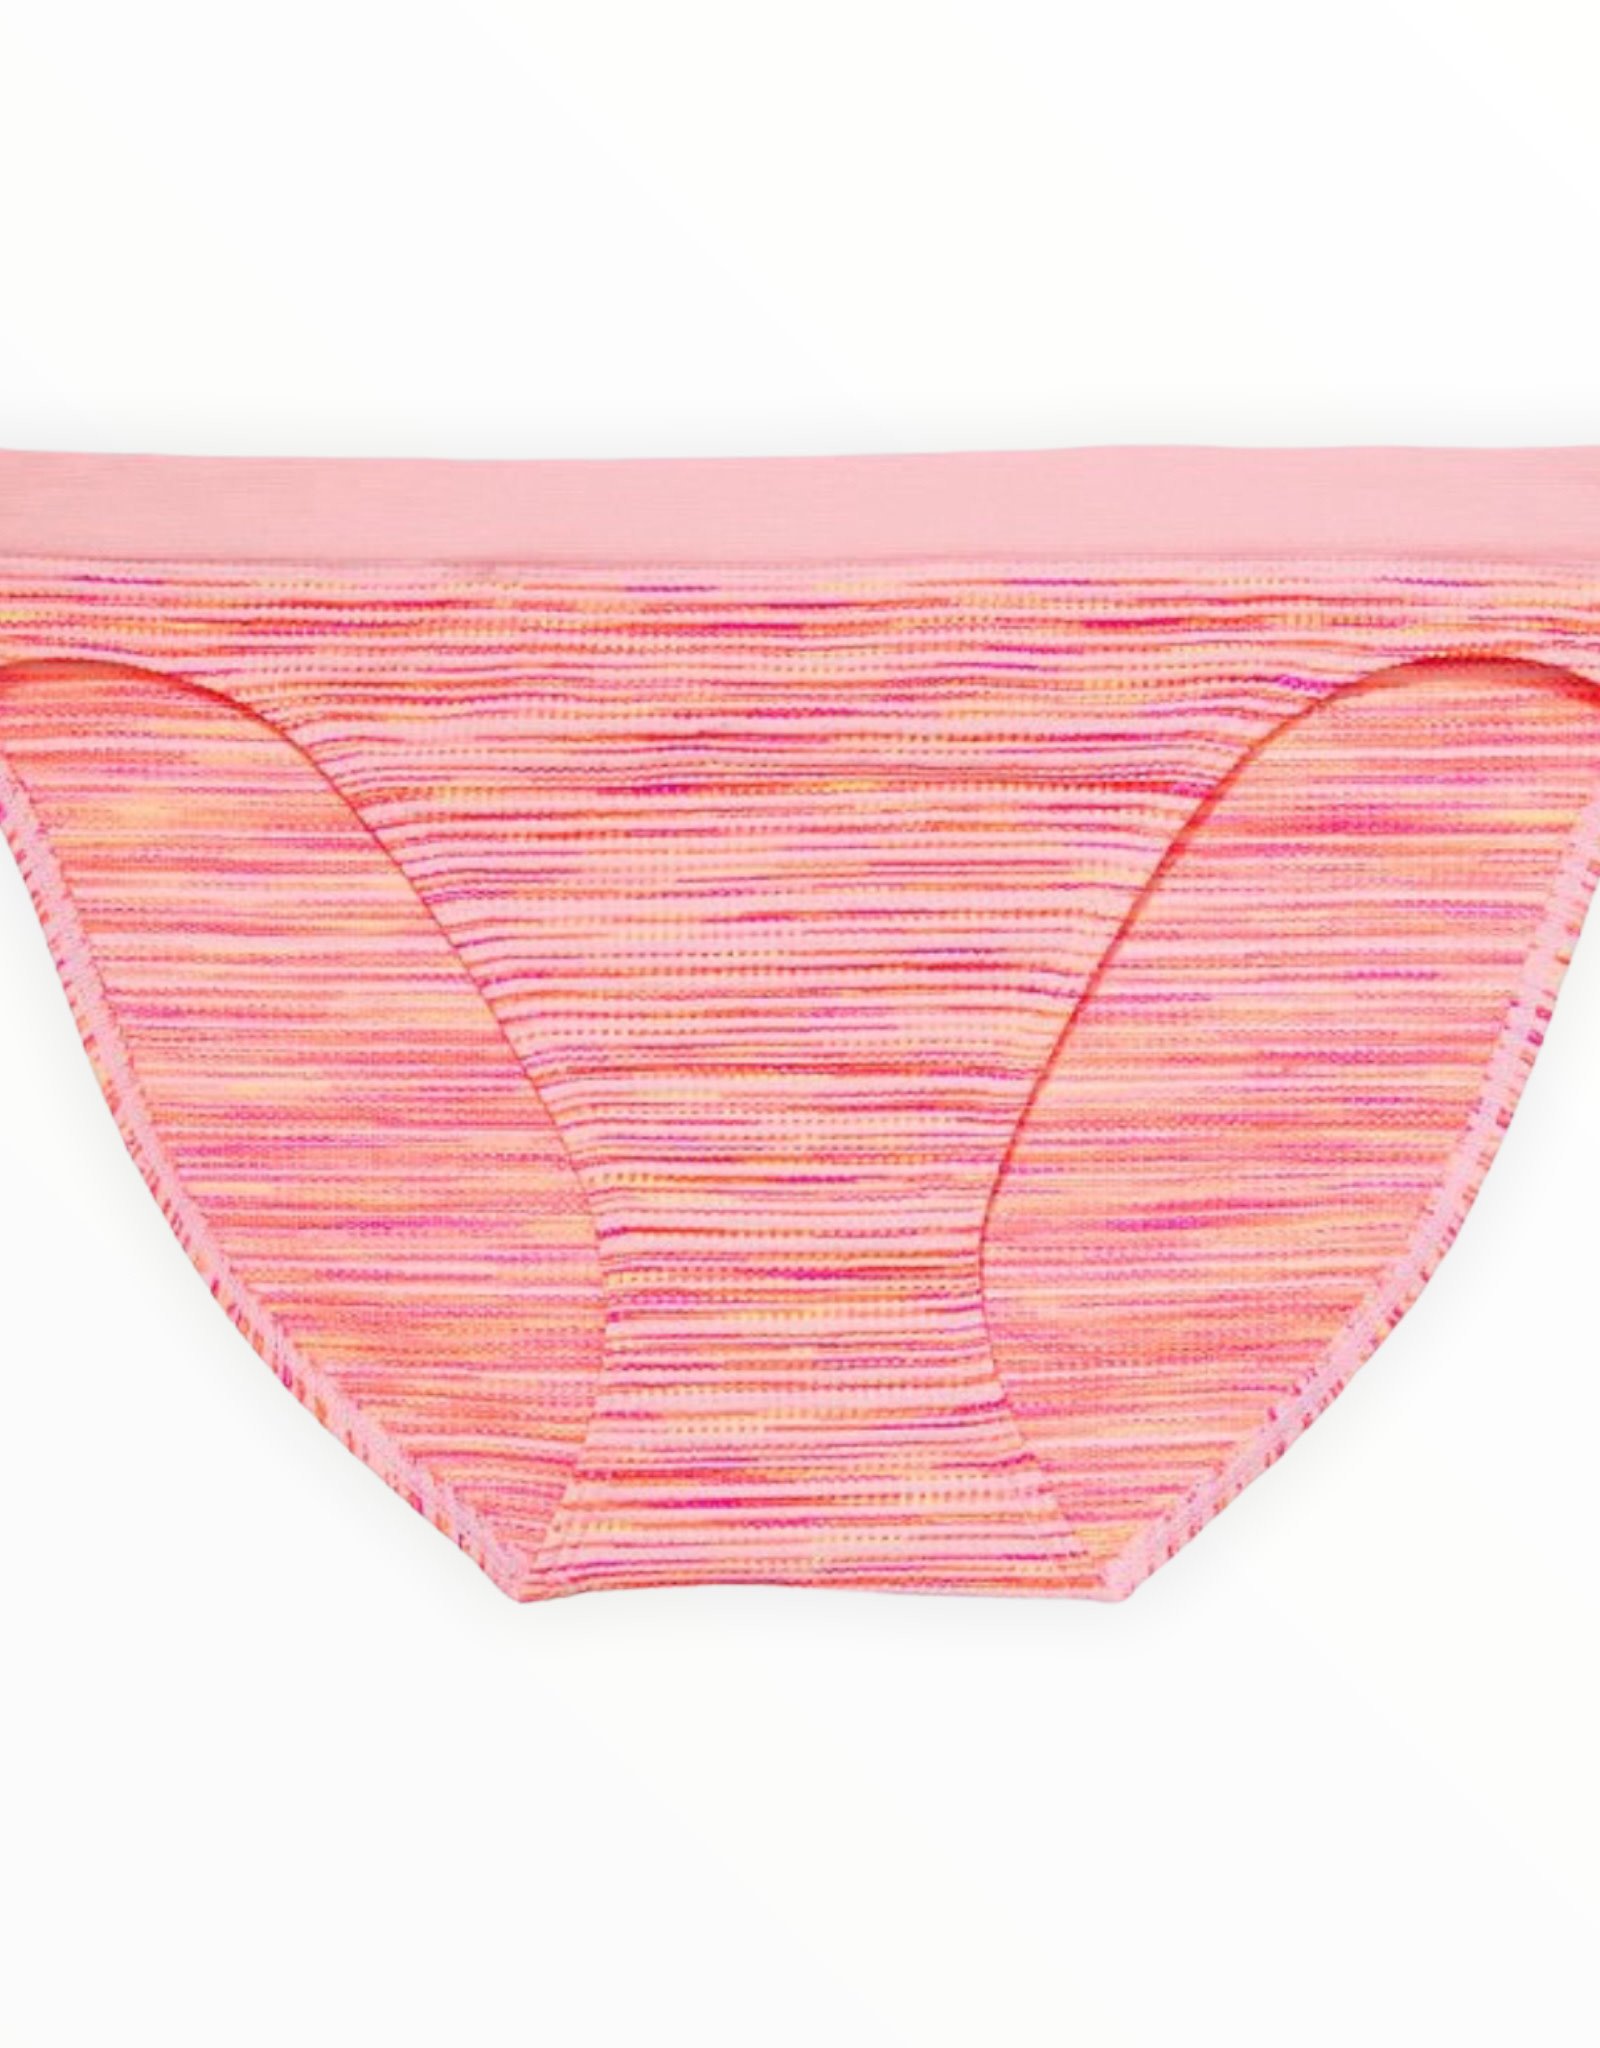 Victoria's Secret, Intimates & Sleepwear, Victorias Secret Seamless Thong Panty  Pink White Stripe Large New